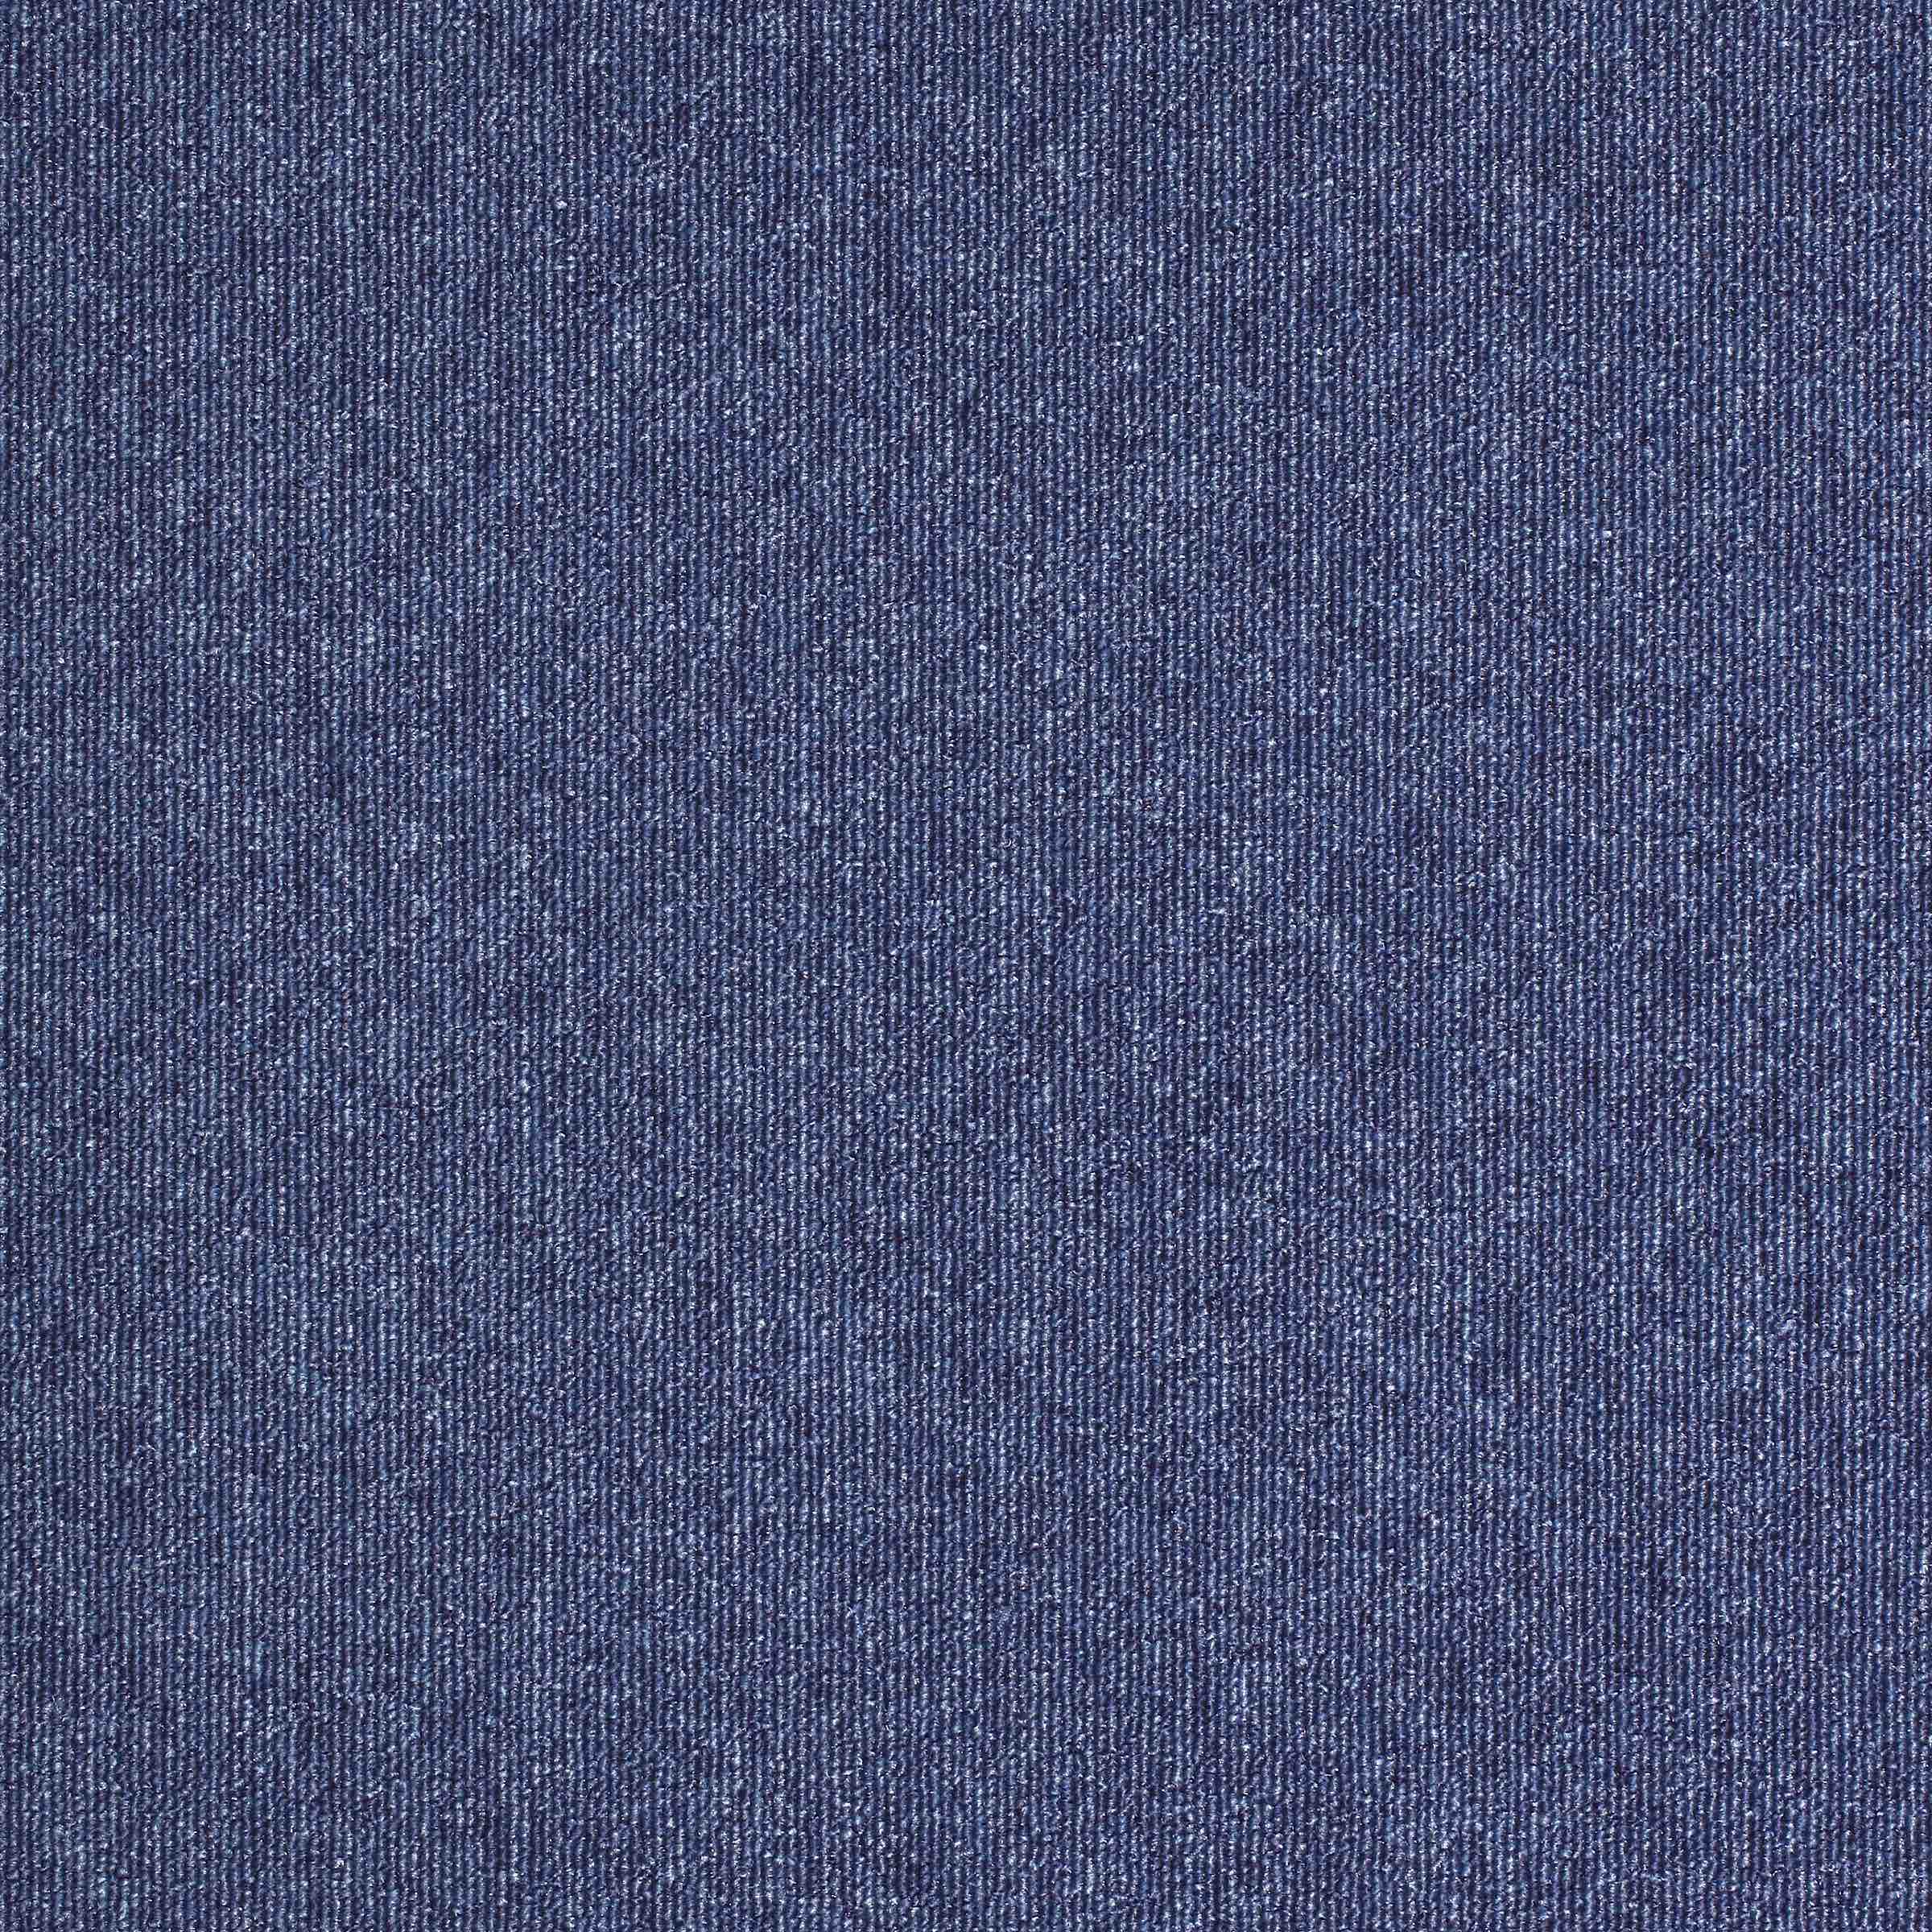 Sirocco | Blue John | Paragon Carpet Tiles | Commercial Carpet Tiles